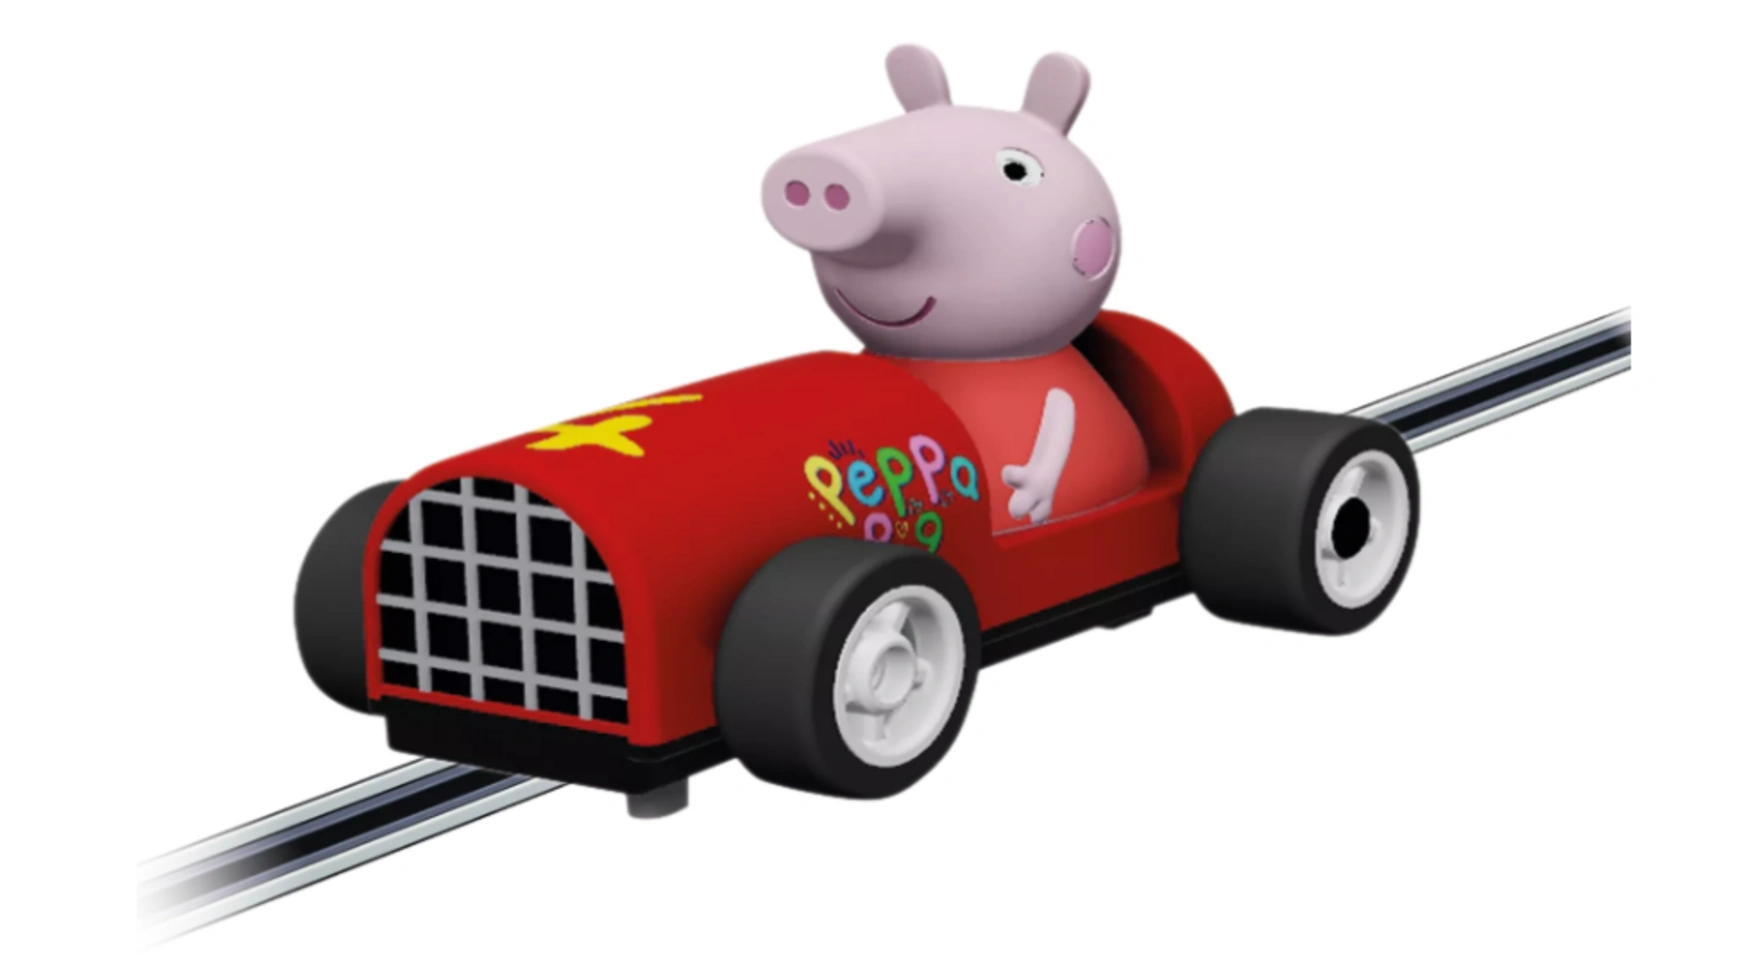 Carrera First Свинка Пеппа Пеппа свинка пеппа обучение в игровой форме dvd английский язык